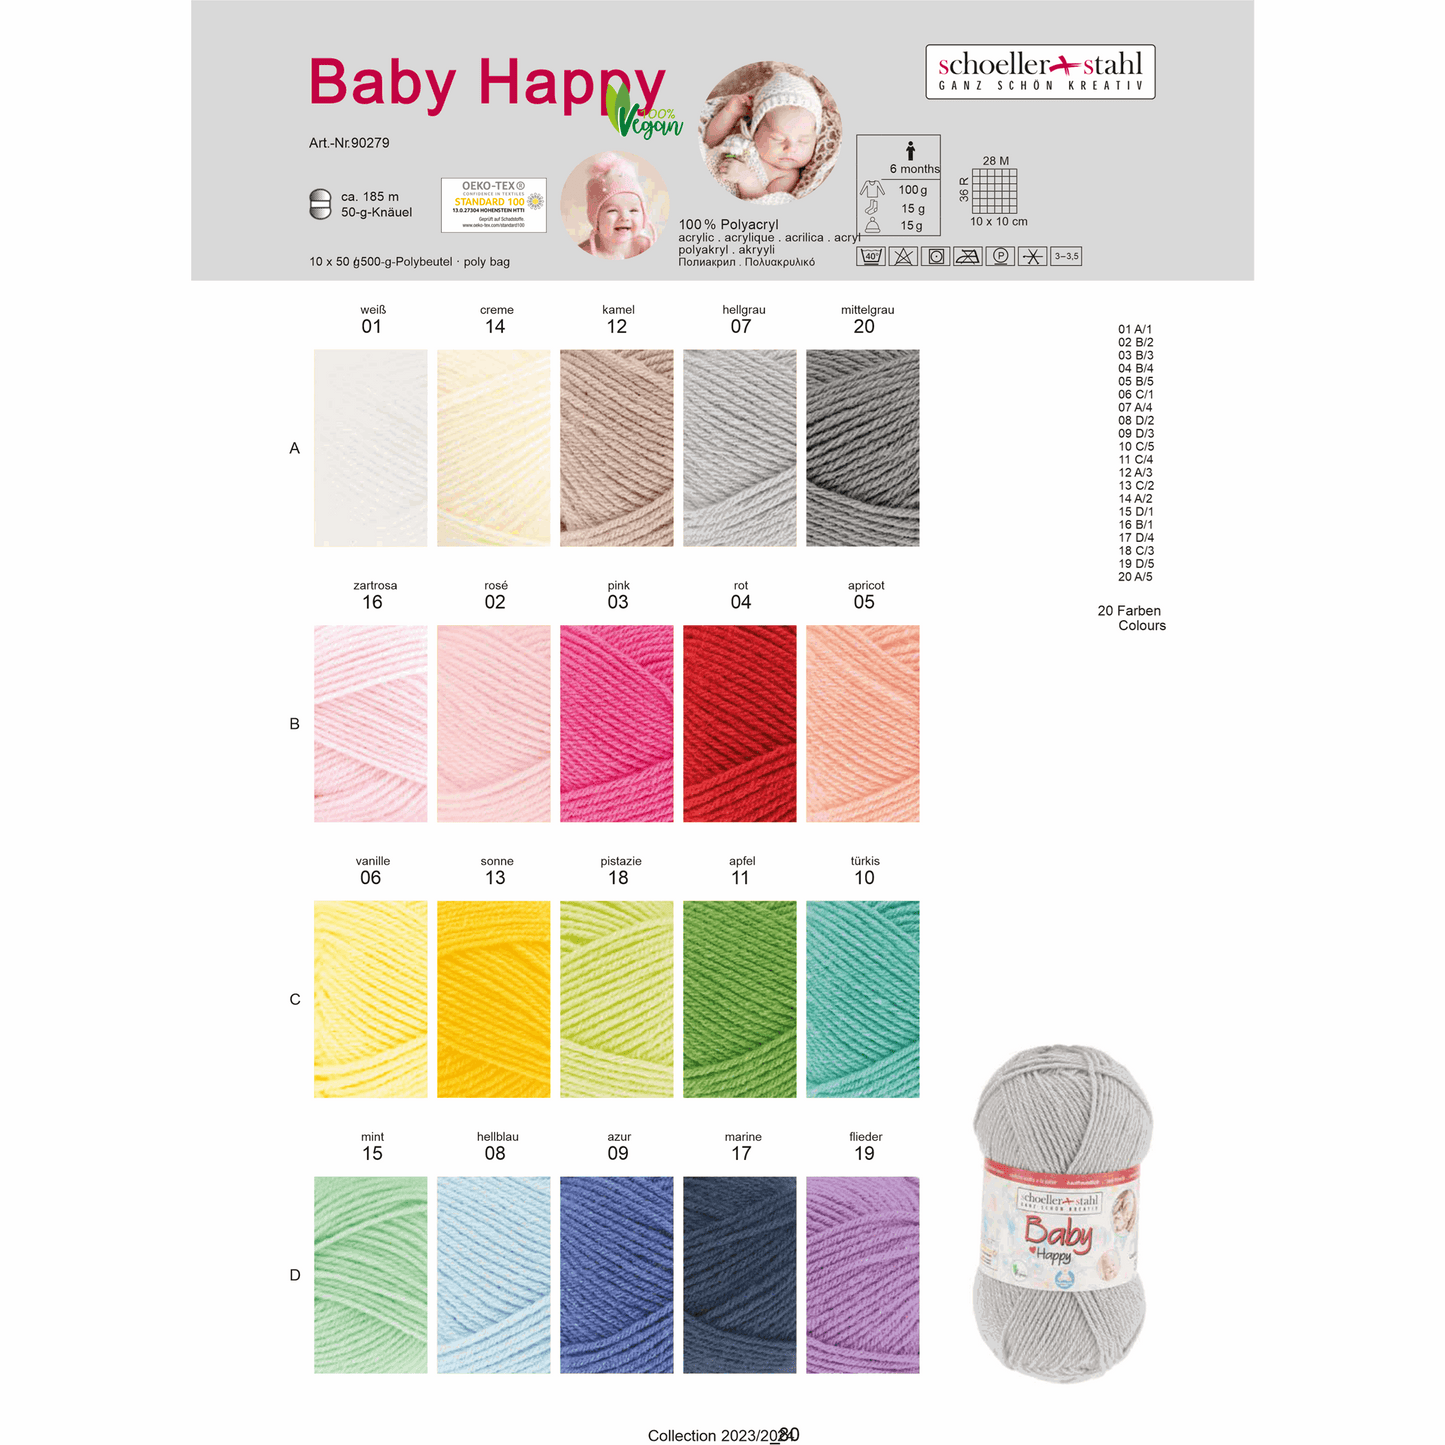 Baby happy 50g, 90279, Farbe 7, hellgrau